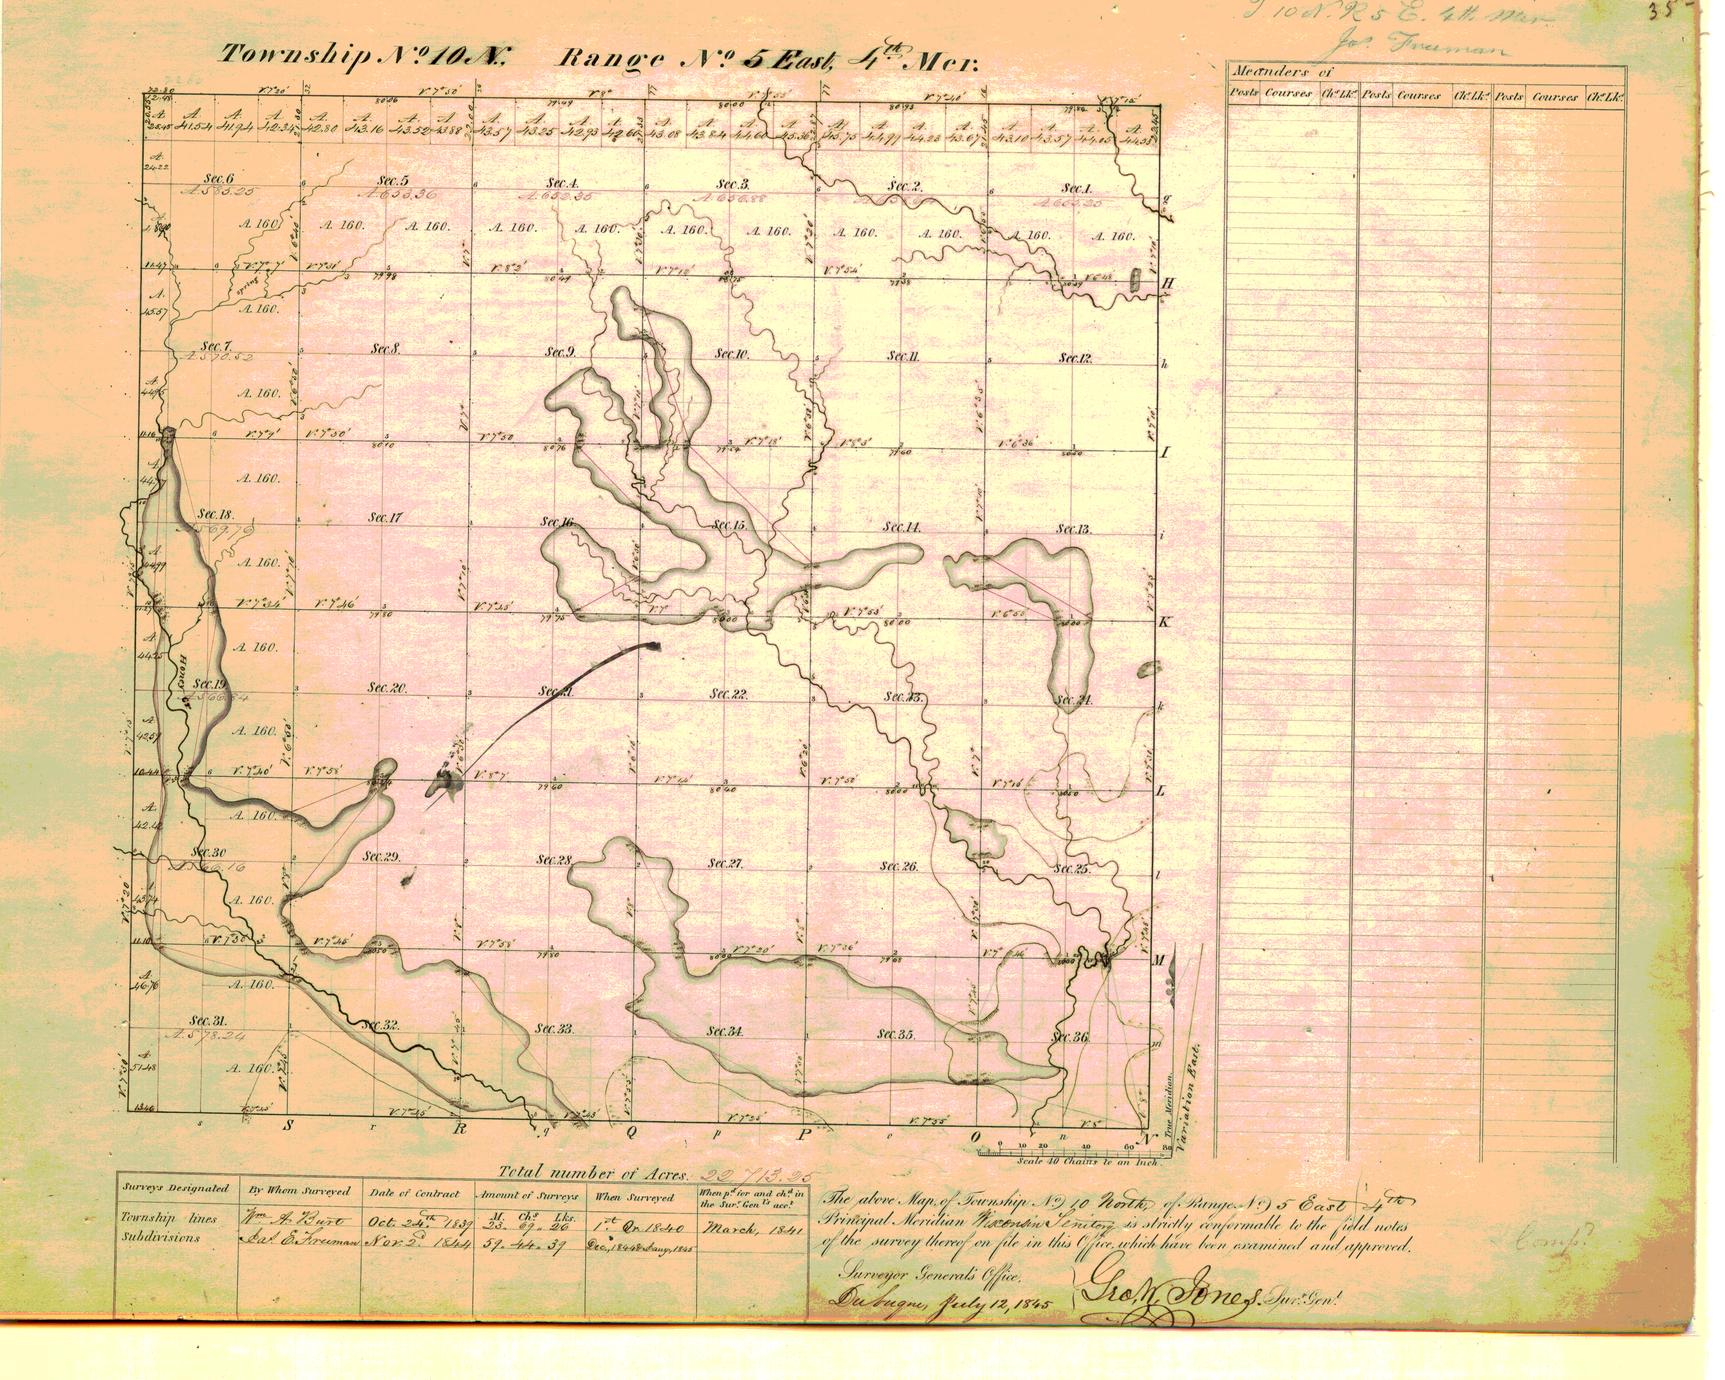 [Public Land Survey System map: Wisconsin Township 10 North, Range 05 East]